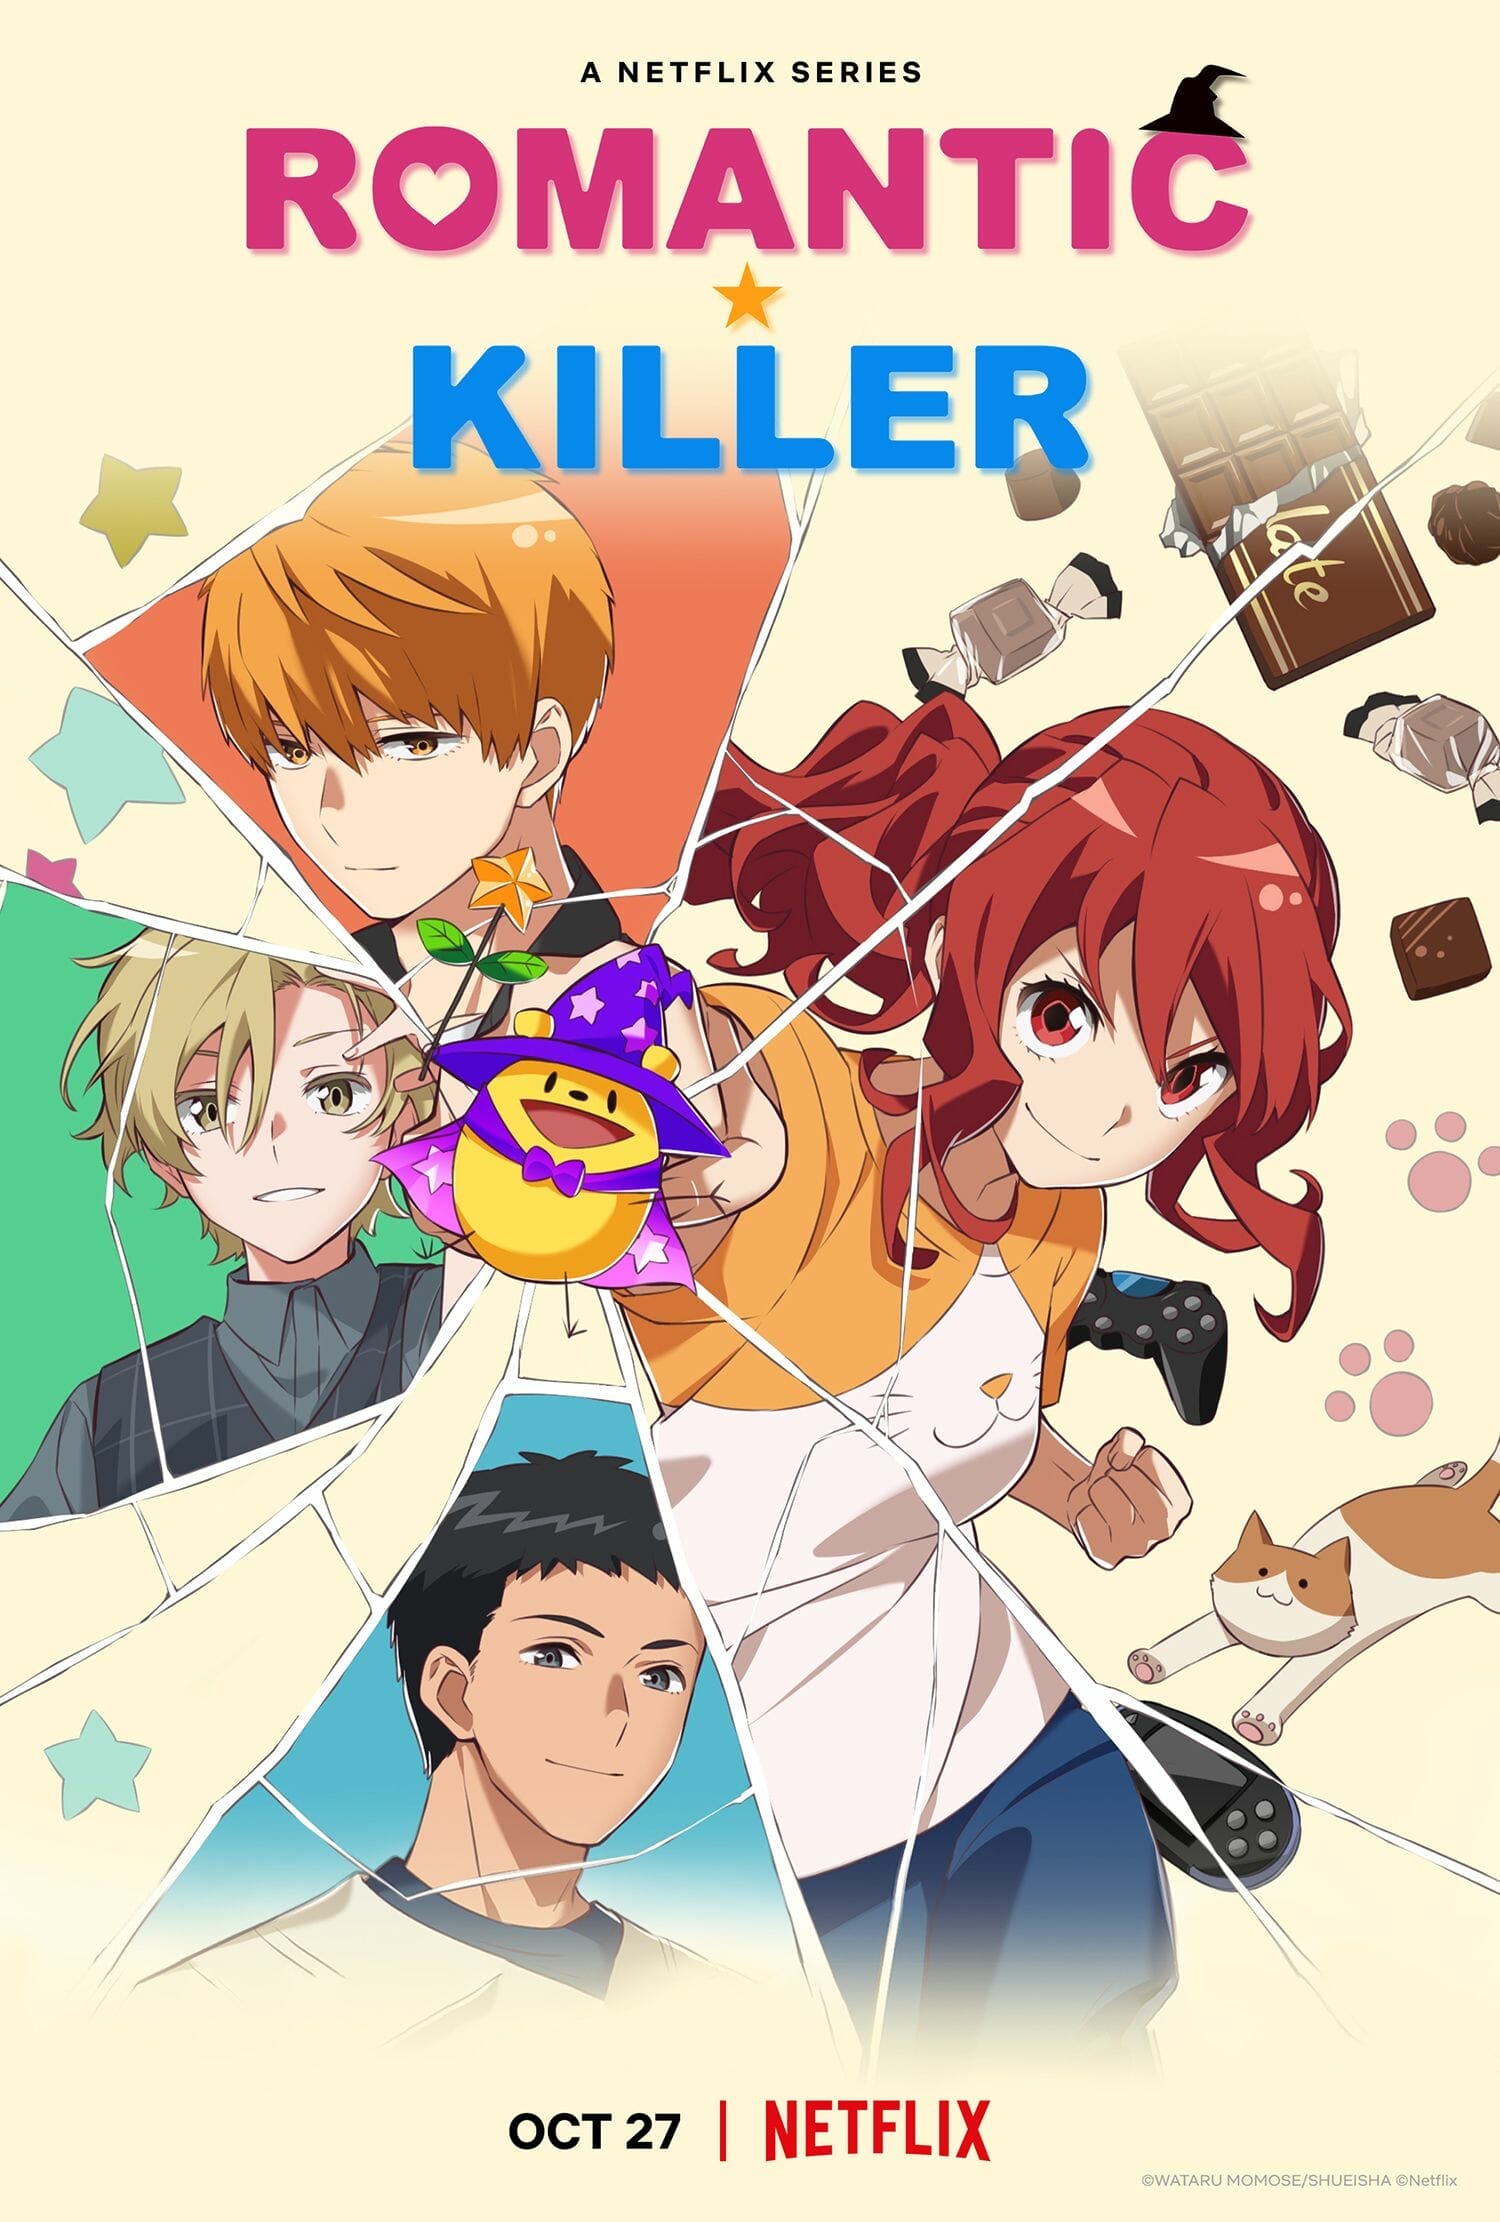 Romantic Killer Oct 27 poster